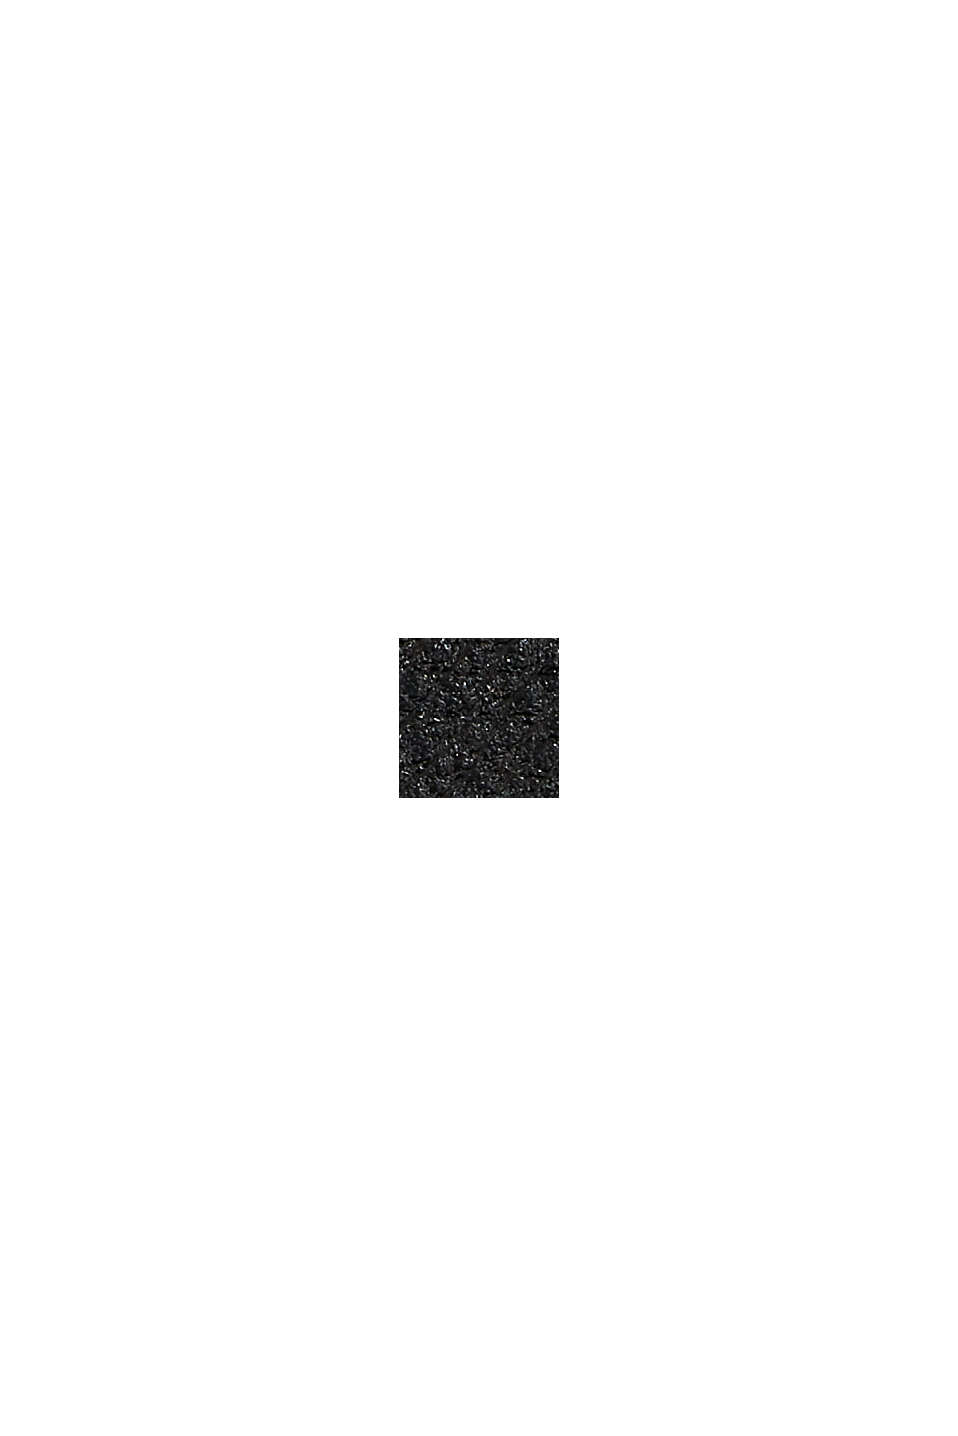 Wegańska: mały portfel z imitacji skóry, BLACK, swatch